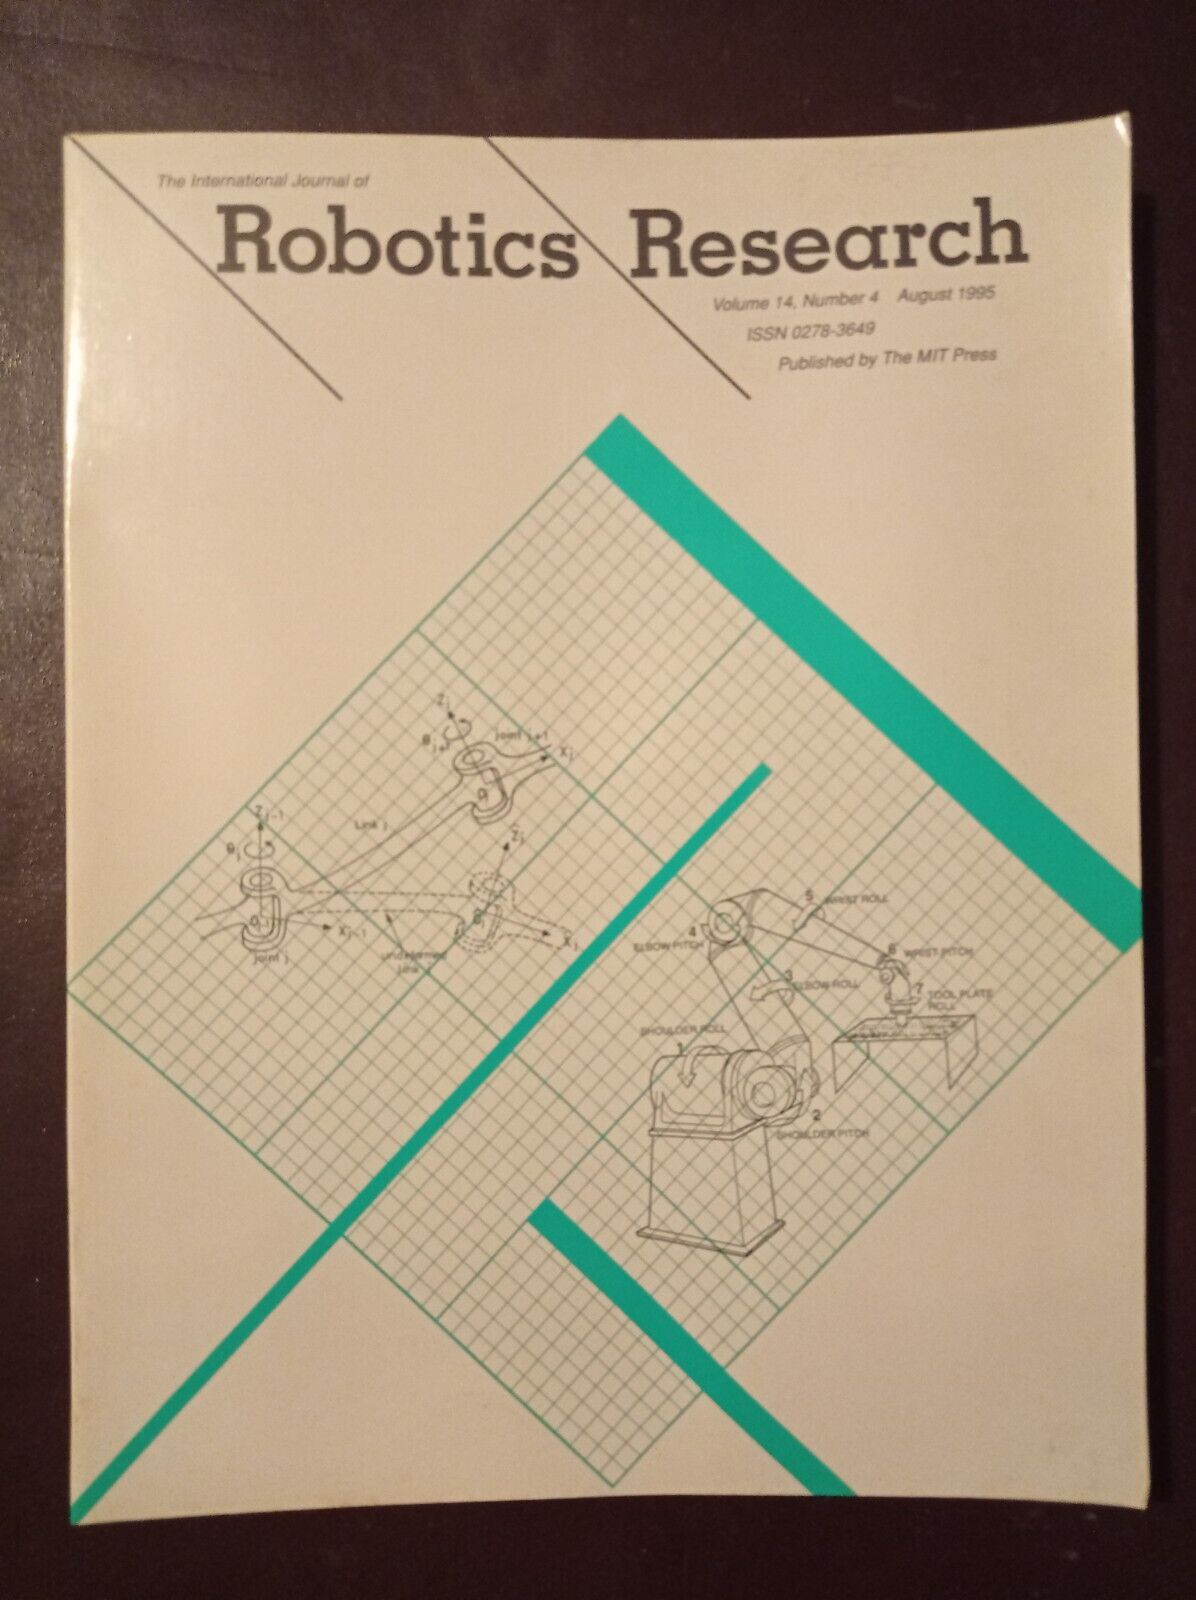 International journal of robotics research, Volume 14, April 1995, number 4